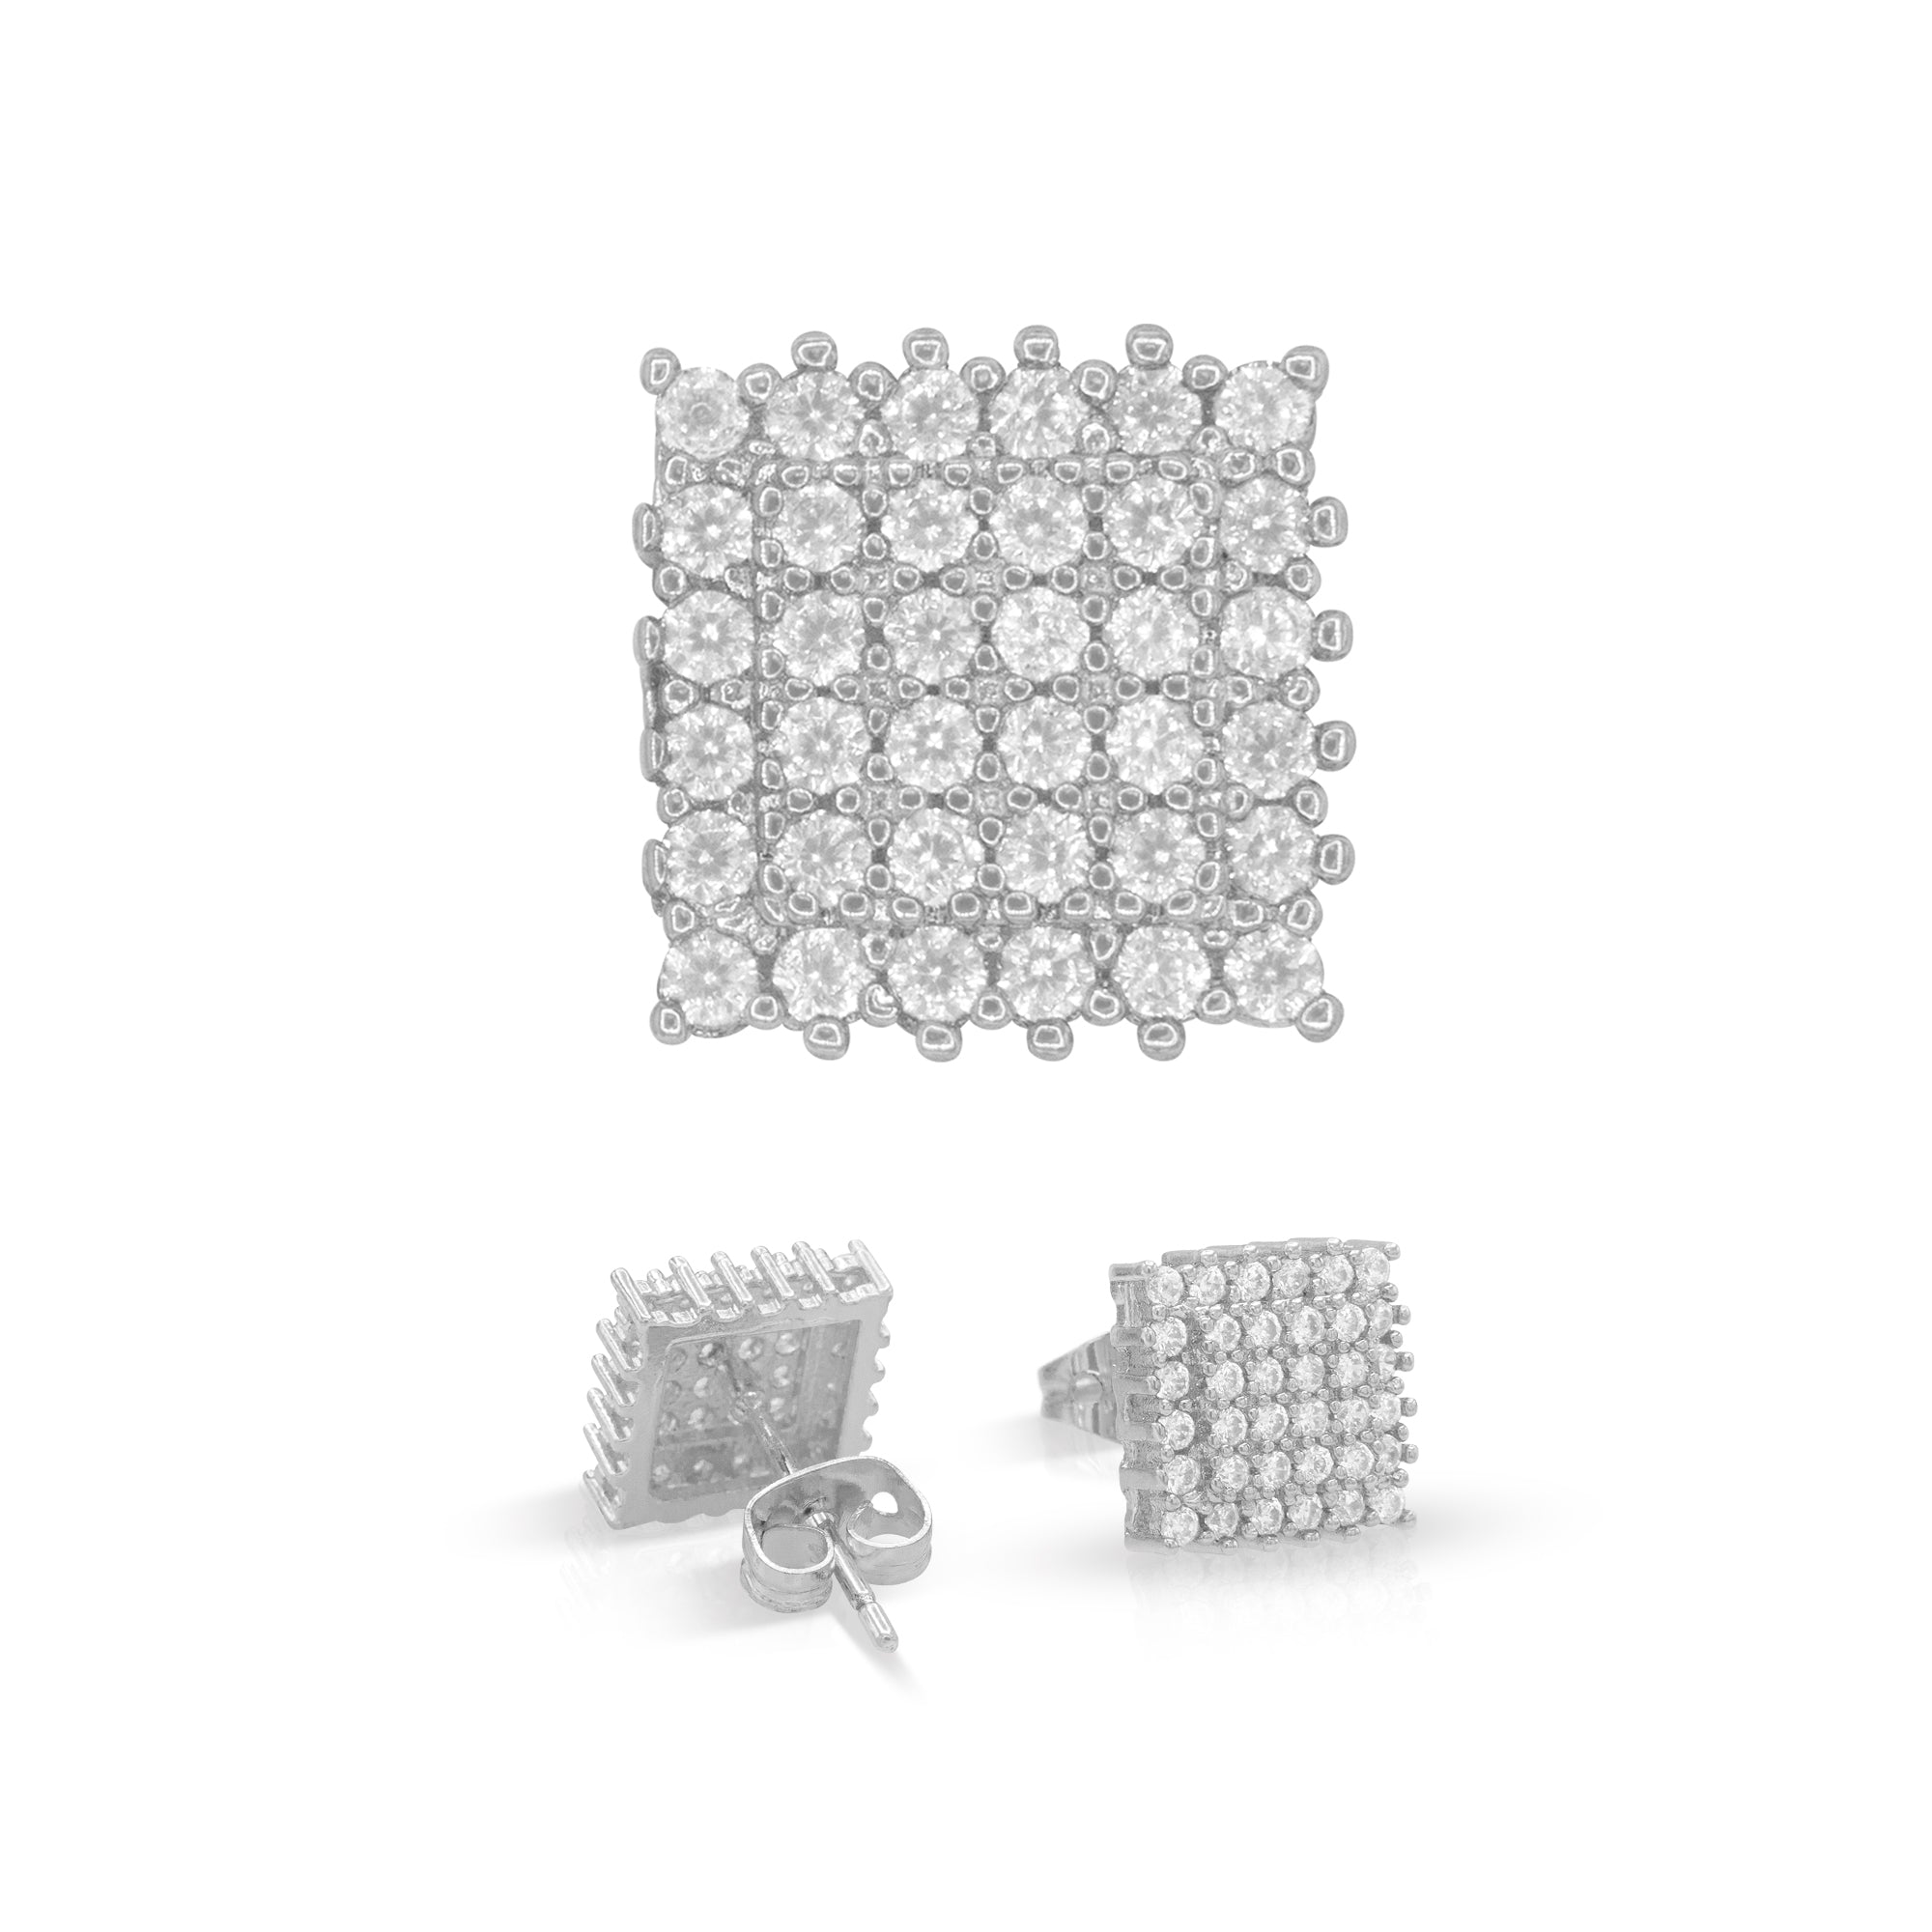 Double Square 7 Cubic Zirconia Earrings 14K Gold Filled Silver Hip Hop Studs Jewelry Women Men